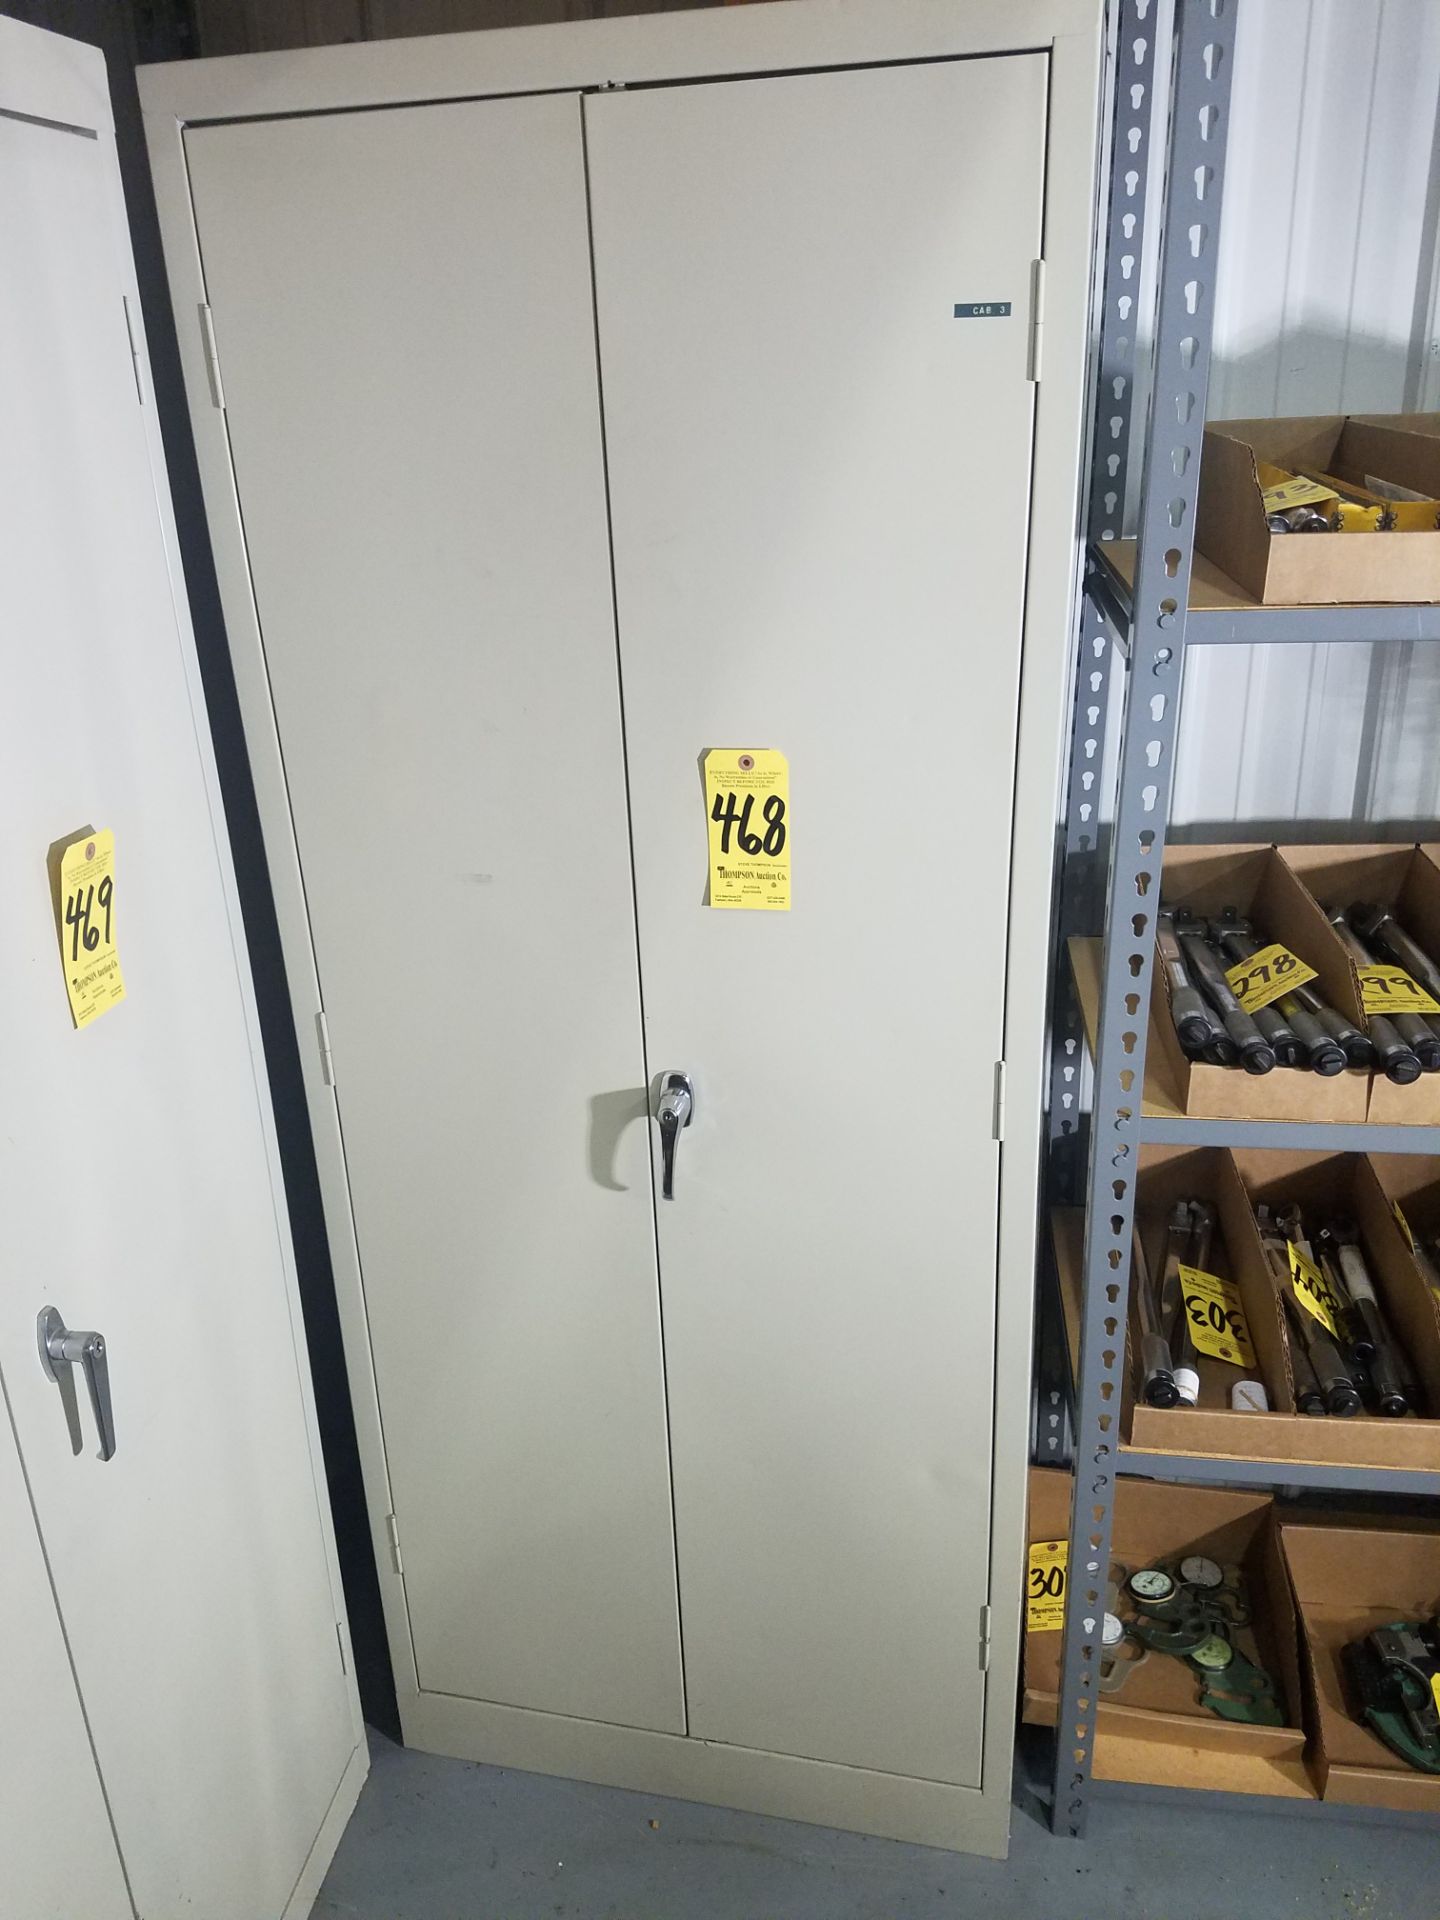 2-Door Upright Metal Cabinet and Contents